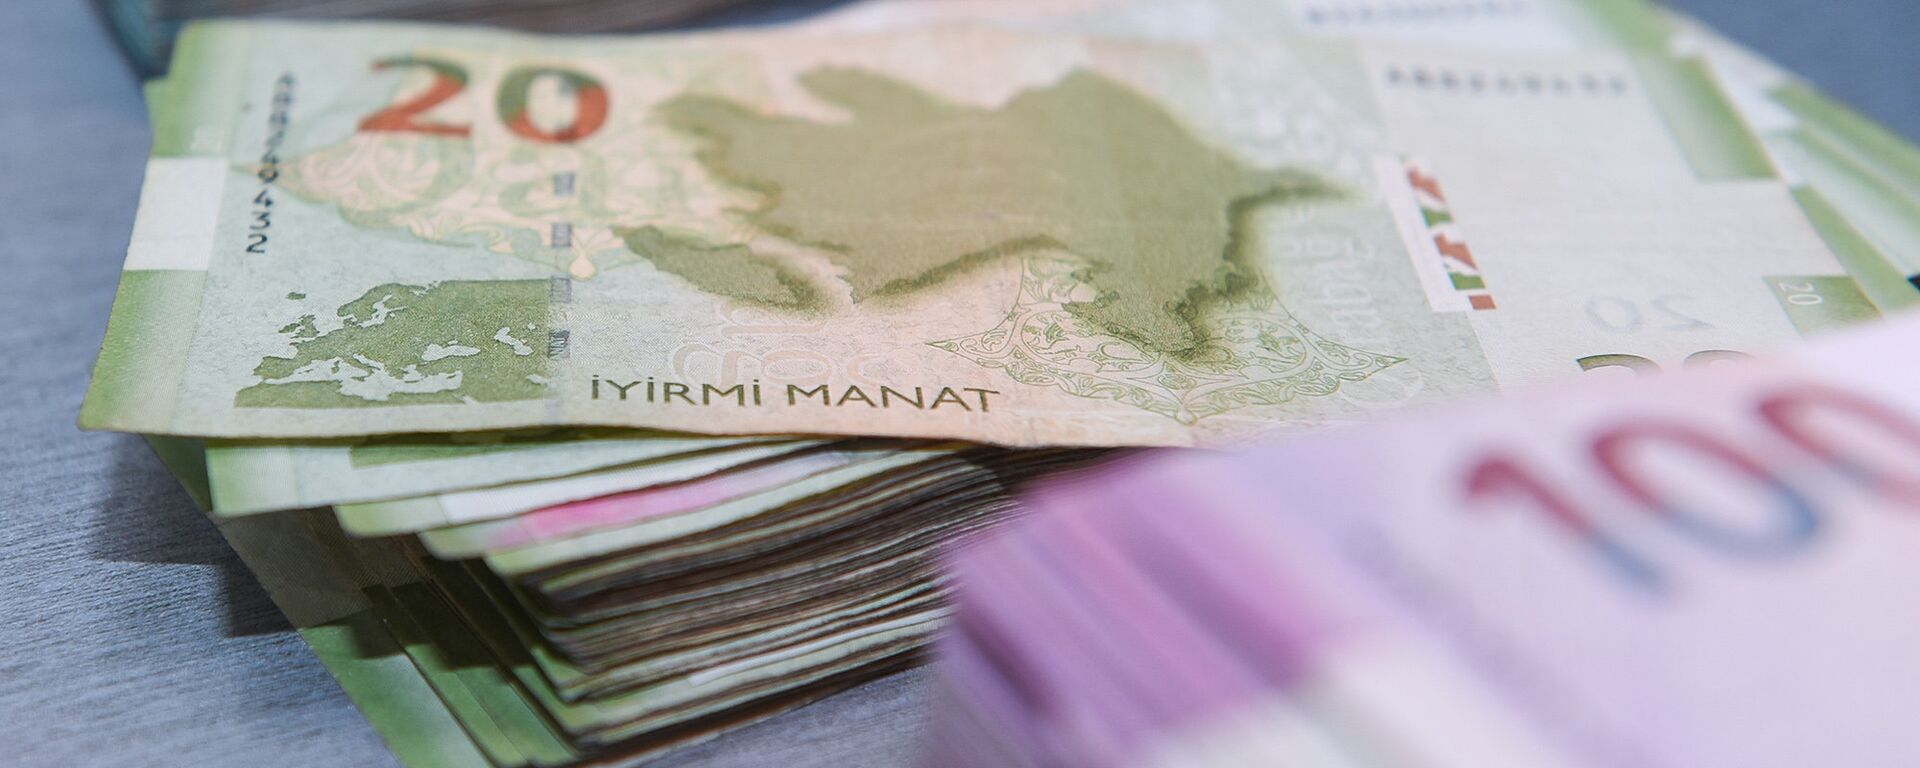 Деньги, азербайджанские манаты, банкноты - Sputnik Азербайджан, 1920, 12.02.2021